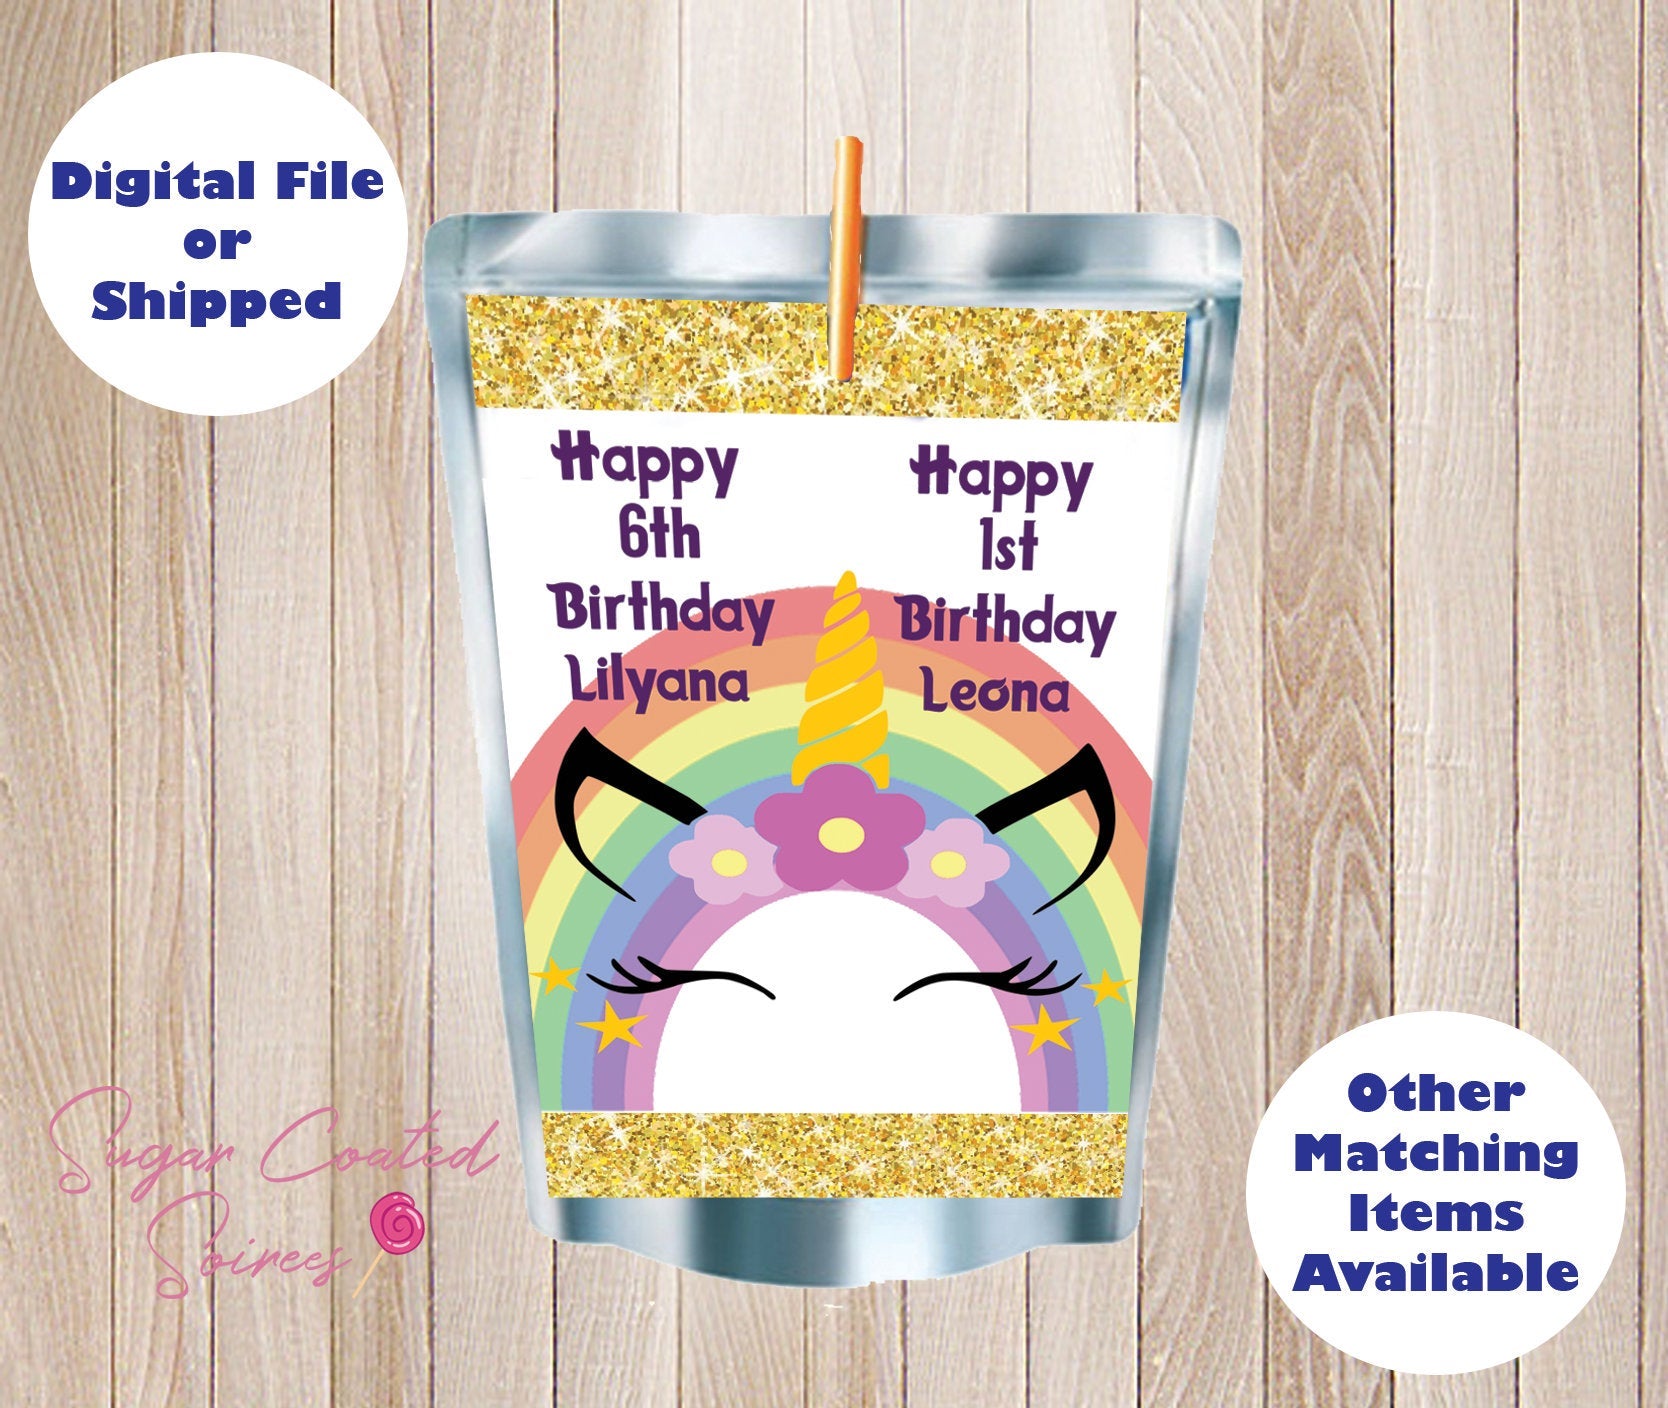 SHIPPED PRINTED Rainbow Unicorn Personalized Capri Sun Juice Label, Birthday Party, Party Favor, DIY